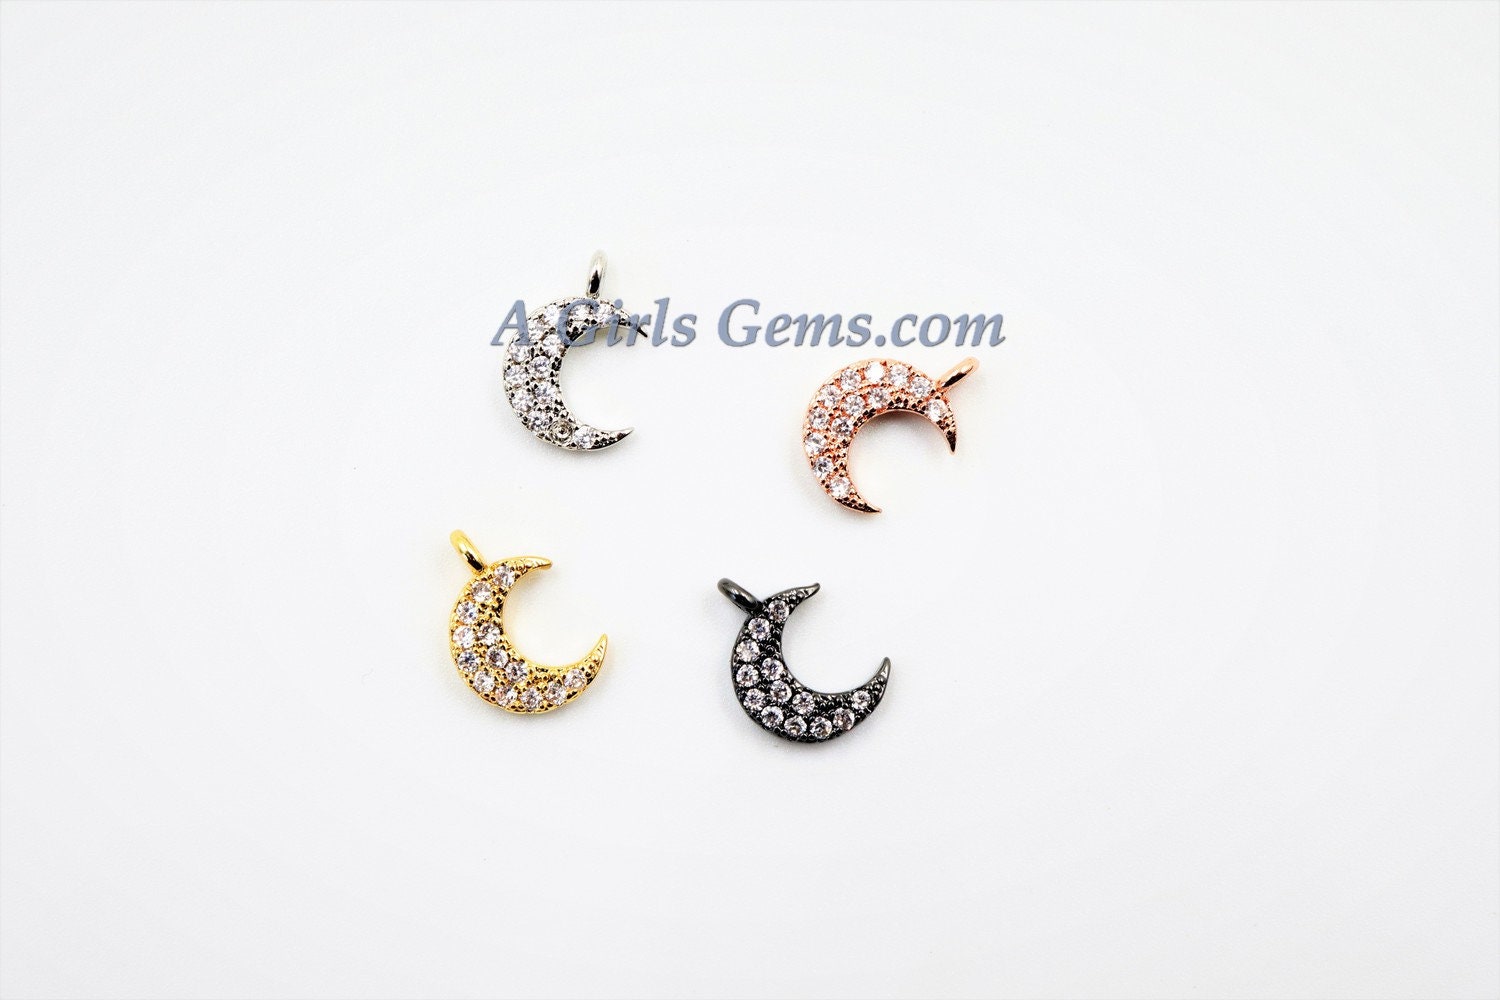 CZ Tiny Crescent Moon Charm, 3 pcs Mini Moon Charms, Dainty CZ Moon, 8 x 10 mm #26 - A Girls Gems